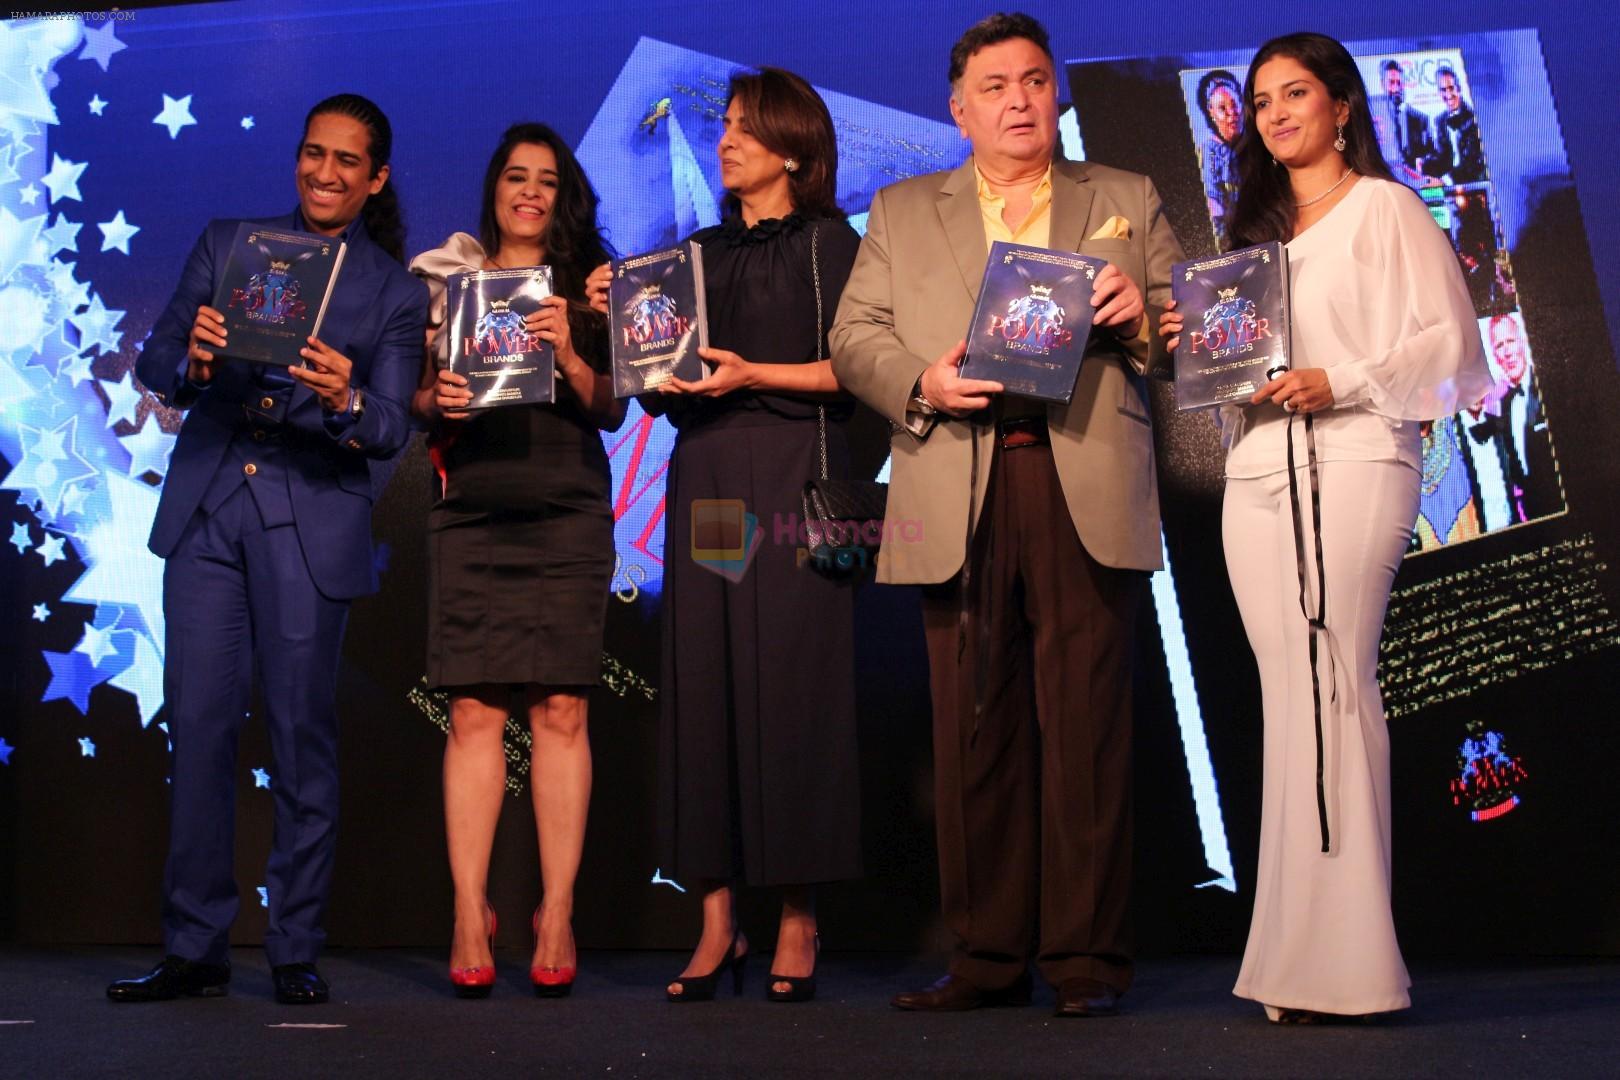 Rishi Kapoor, Nitu Singh Grace POWERBRAND Awards on 11th Sept 2017